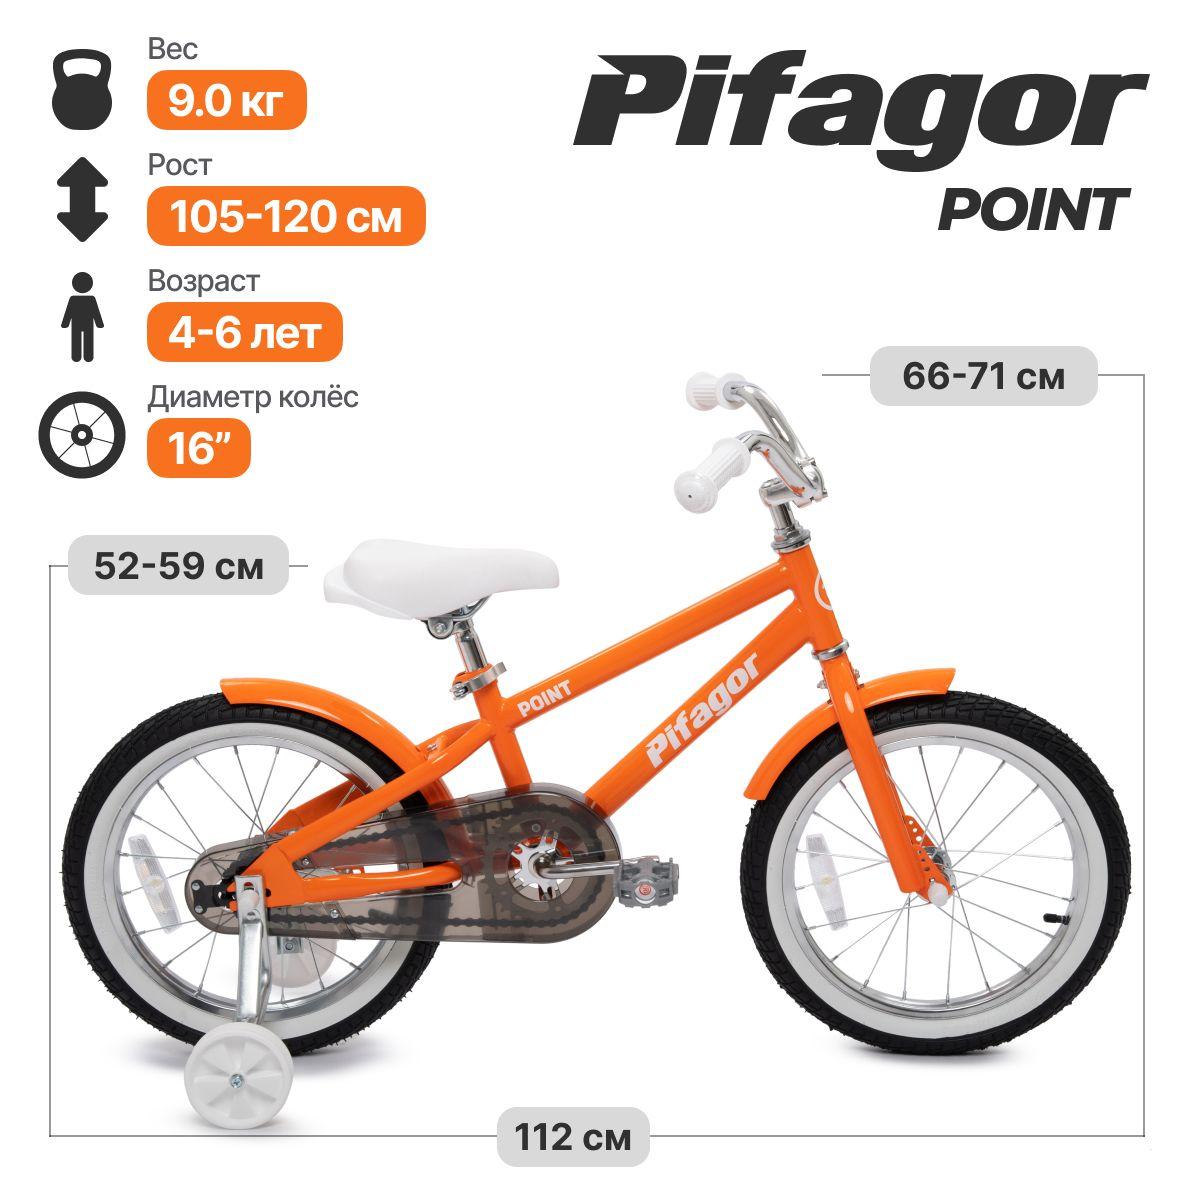 Pifagor | Велосипед Pifagor Point 16